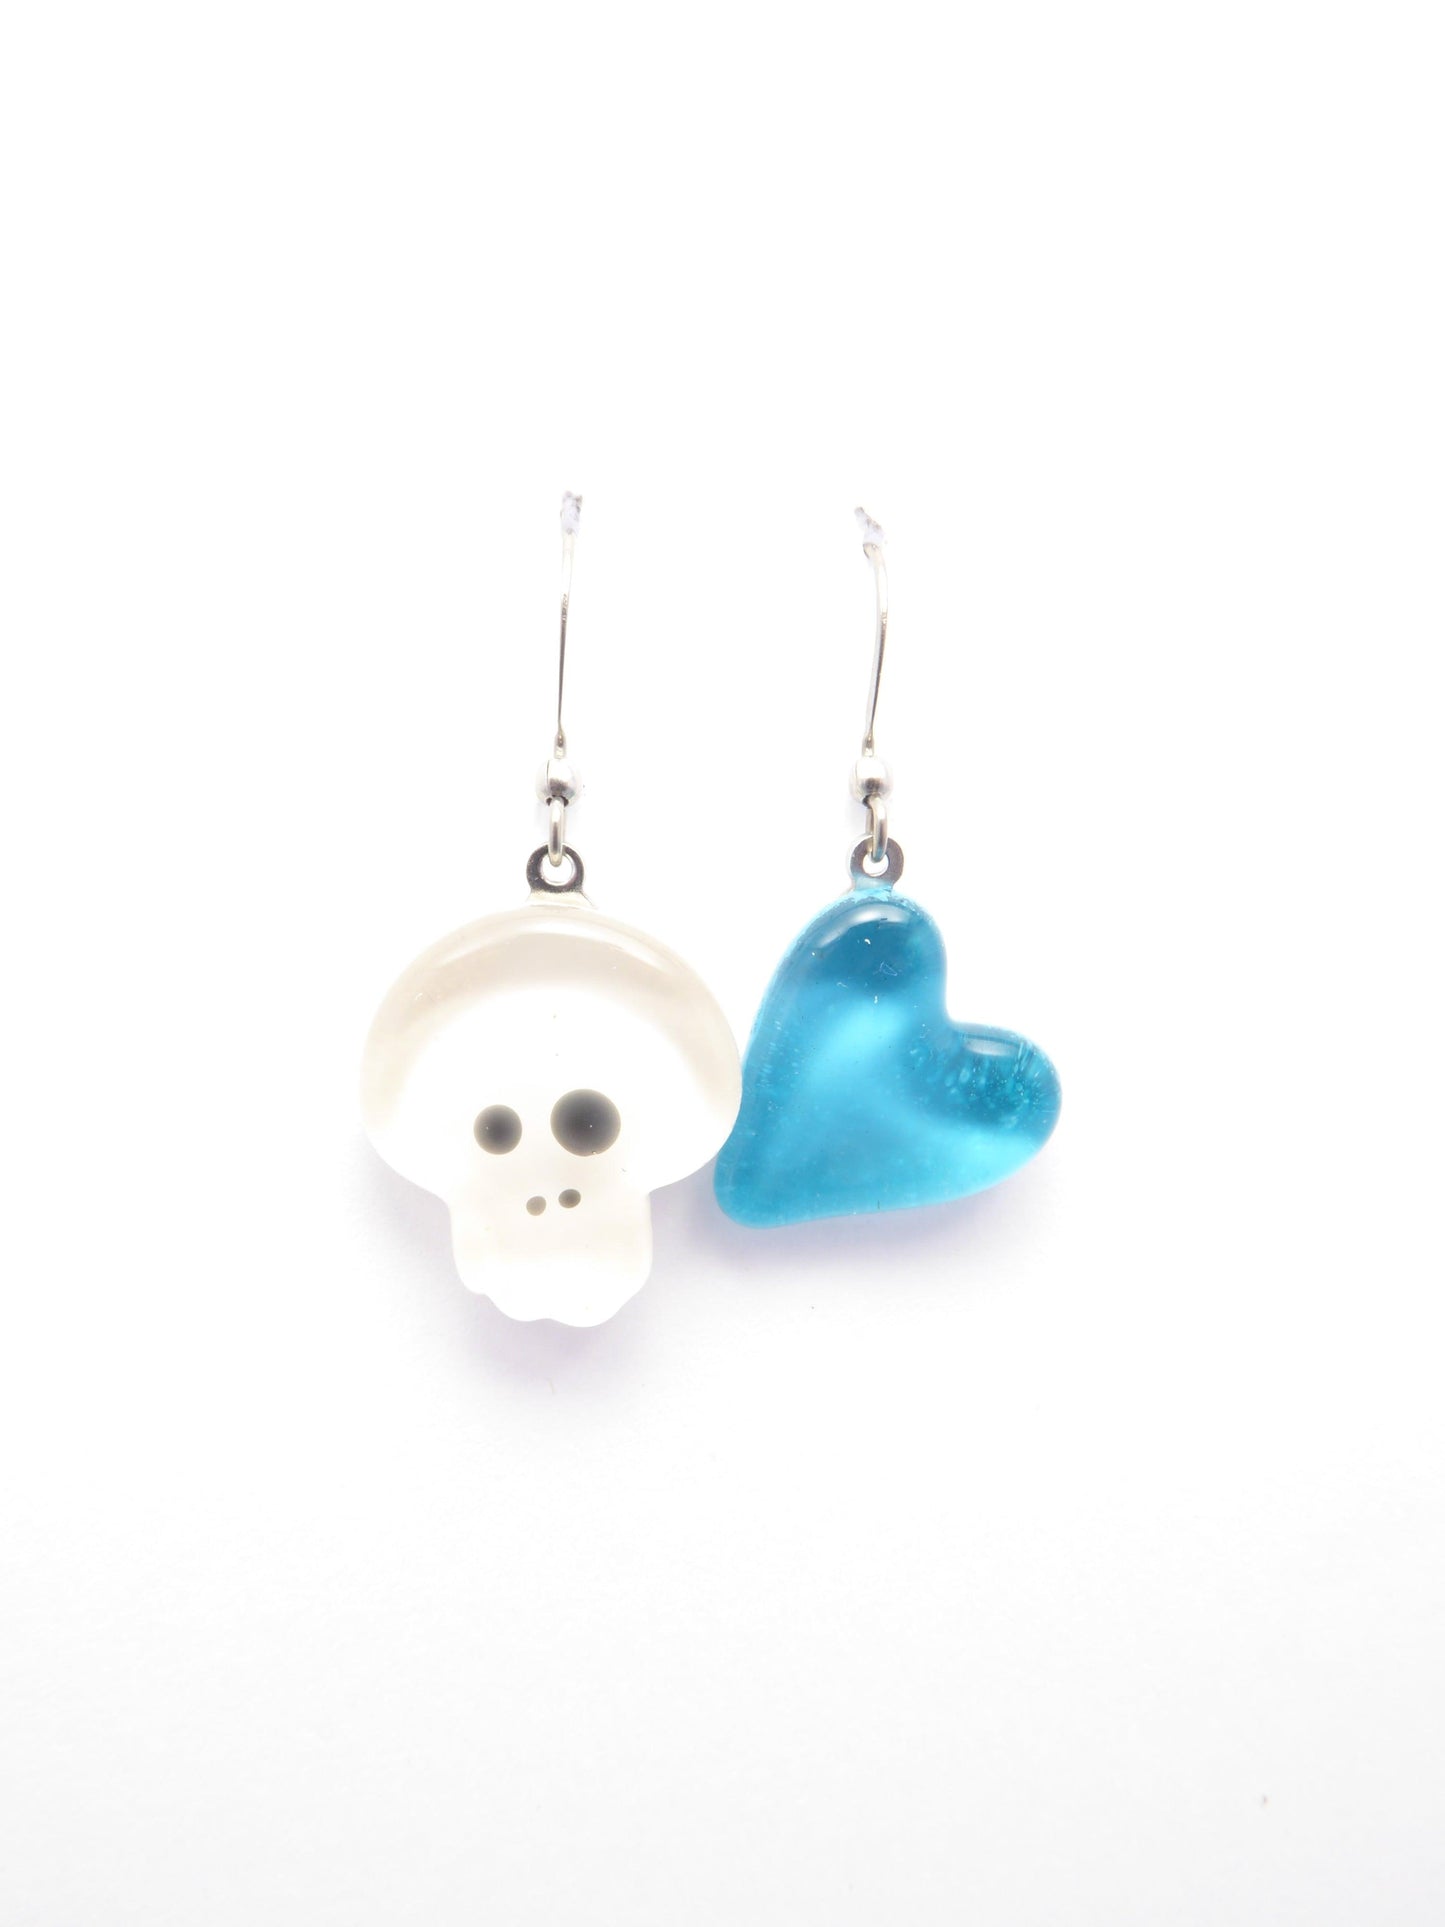 Amor y muerte earrings (color option available) - Lolipop Glass